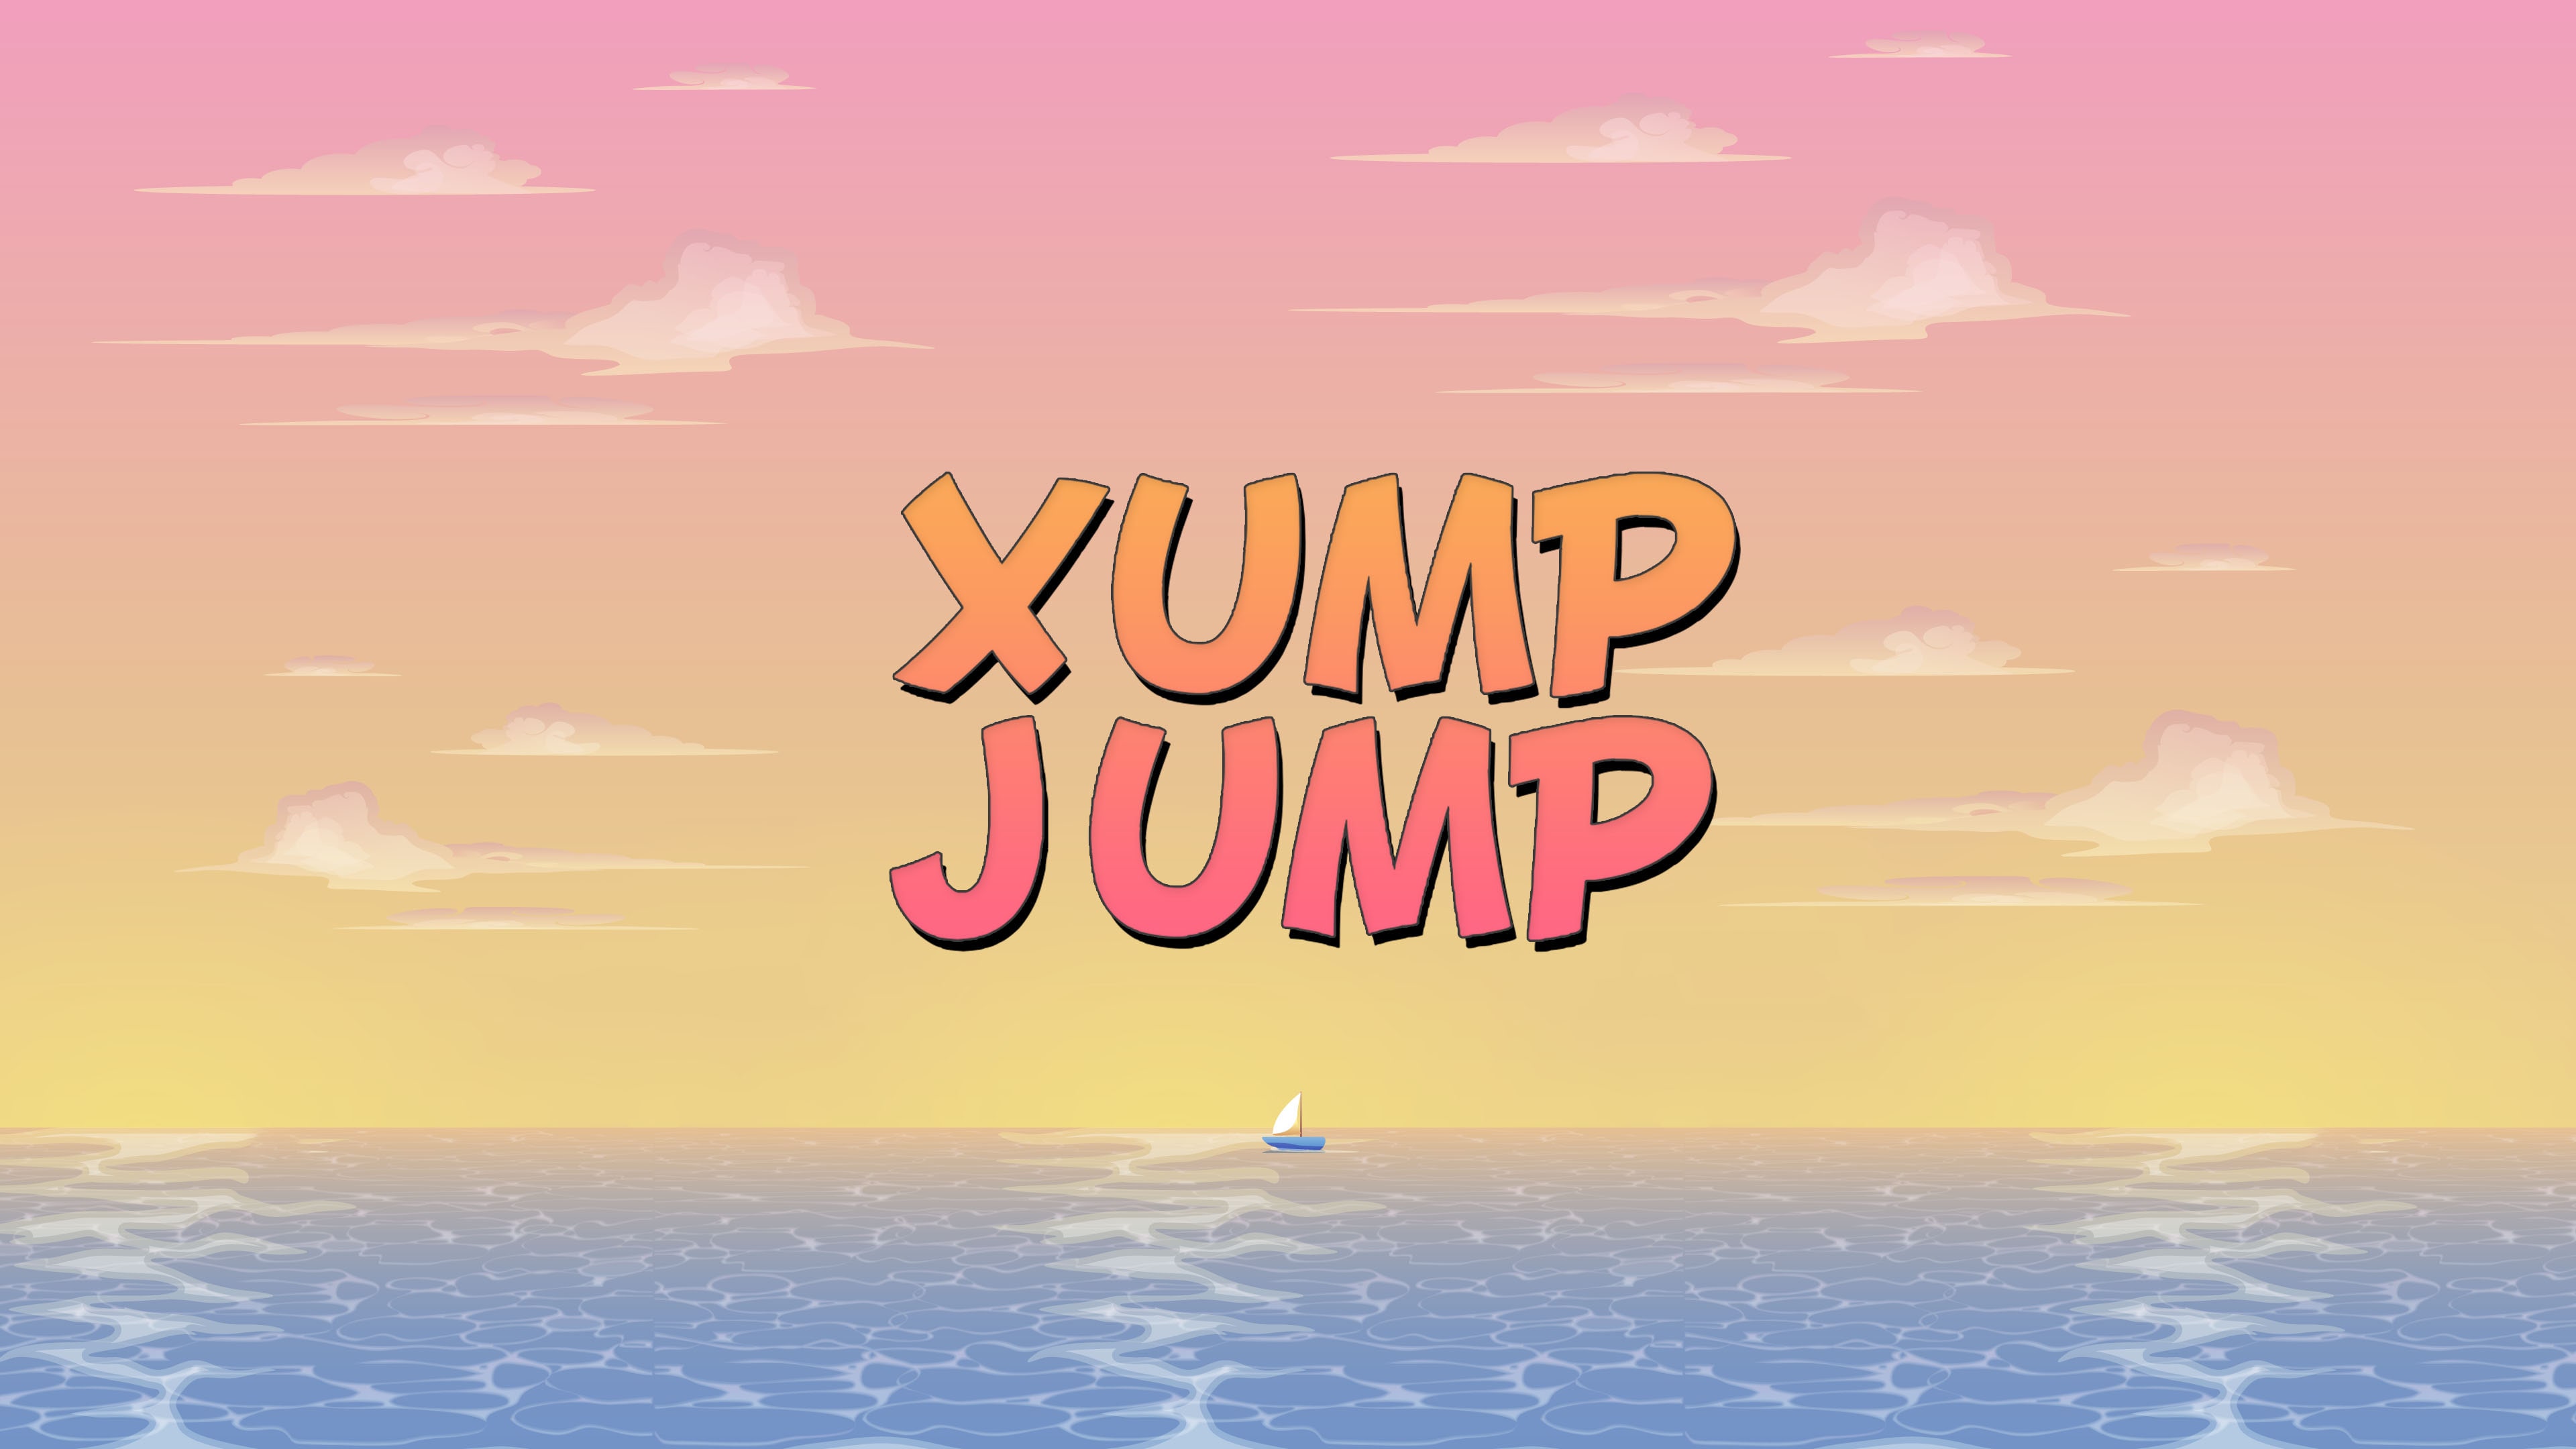 Xump Jump (영어)